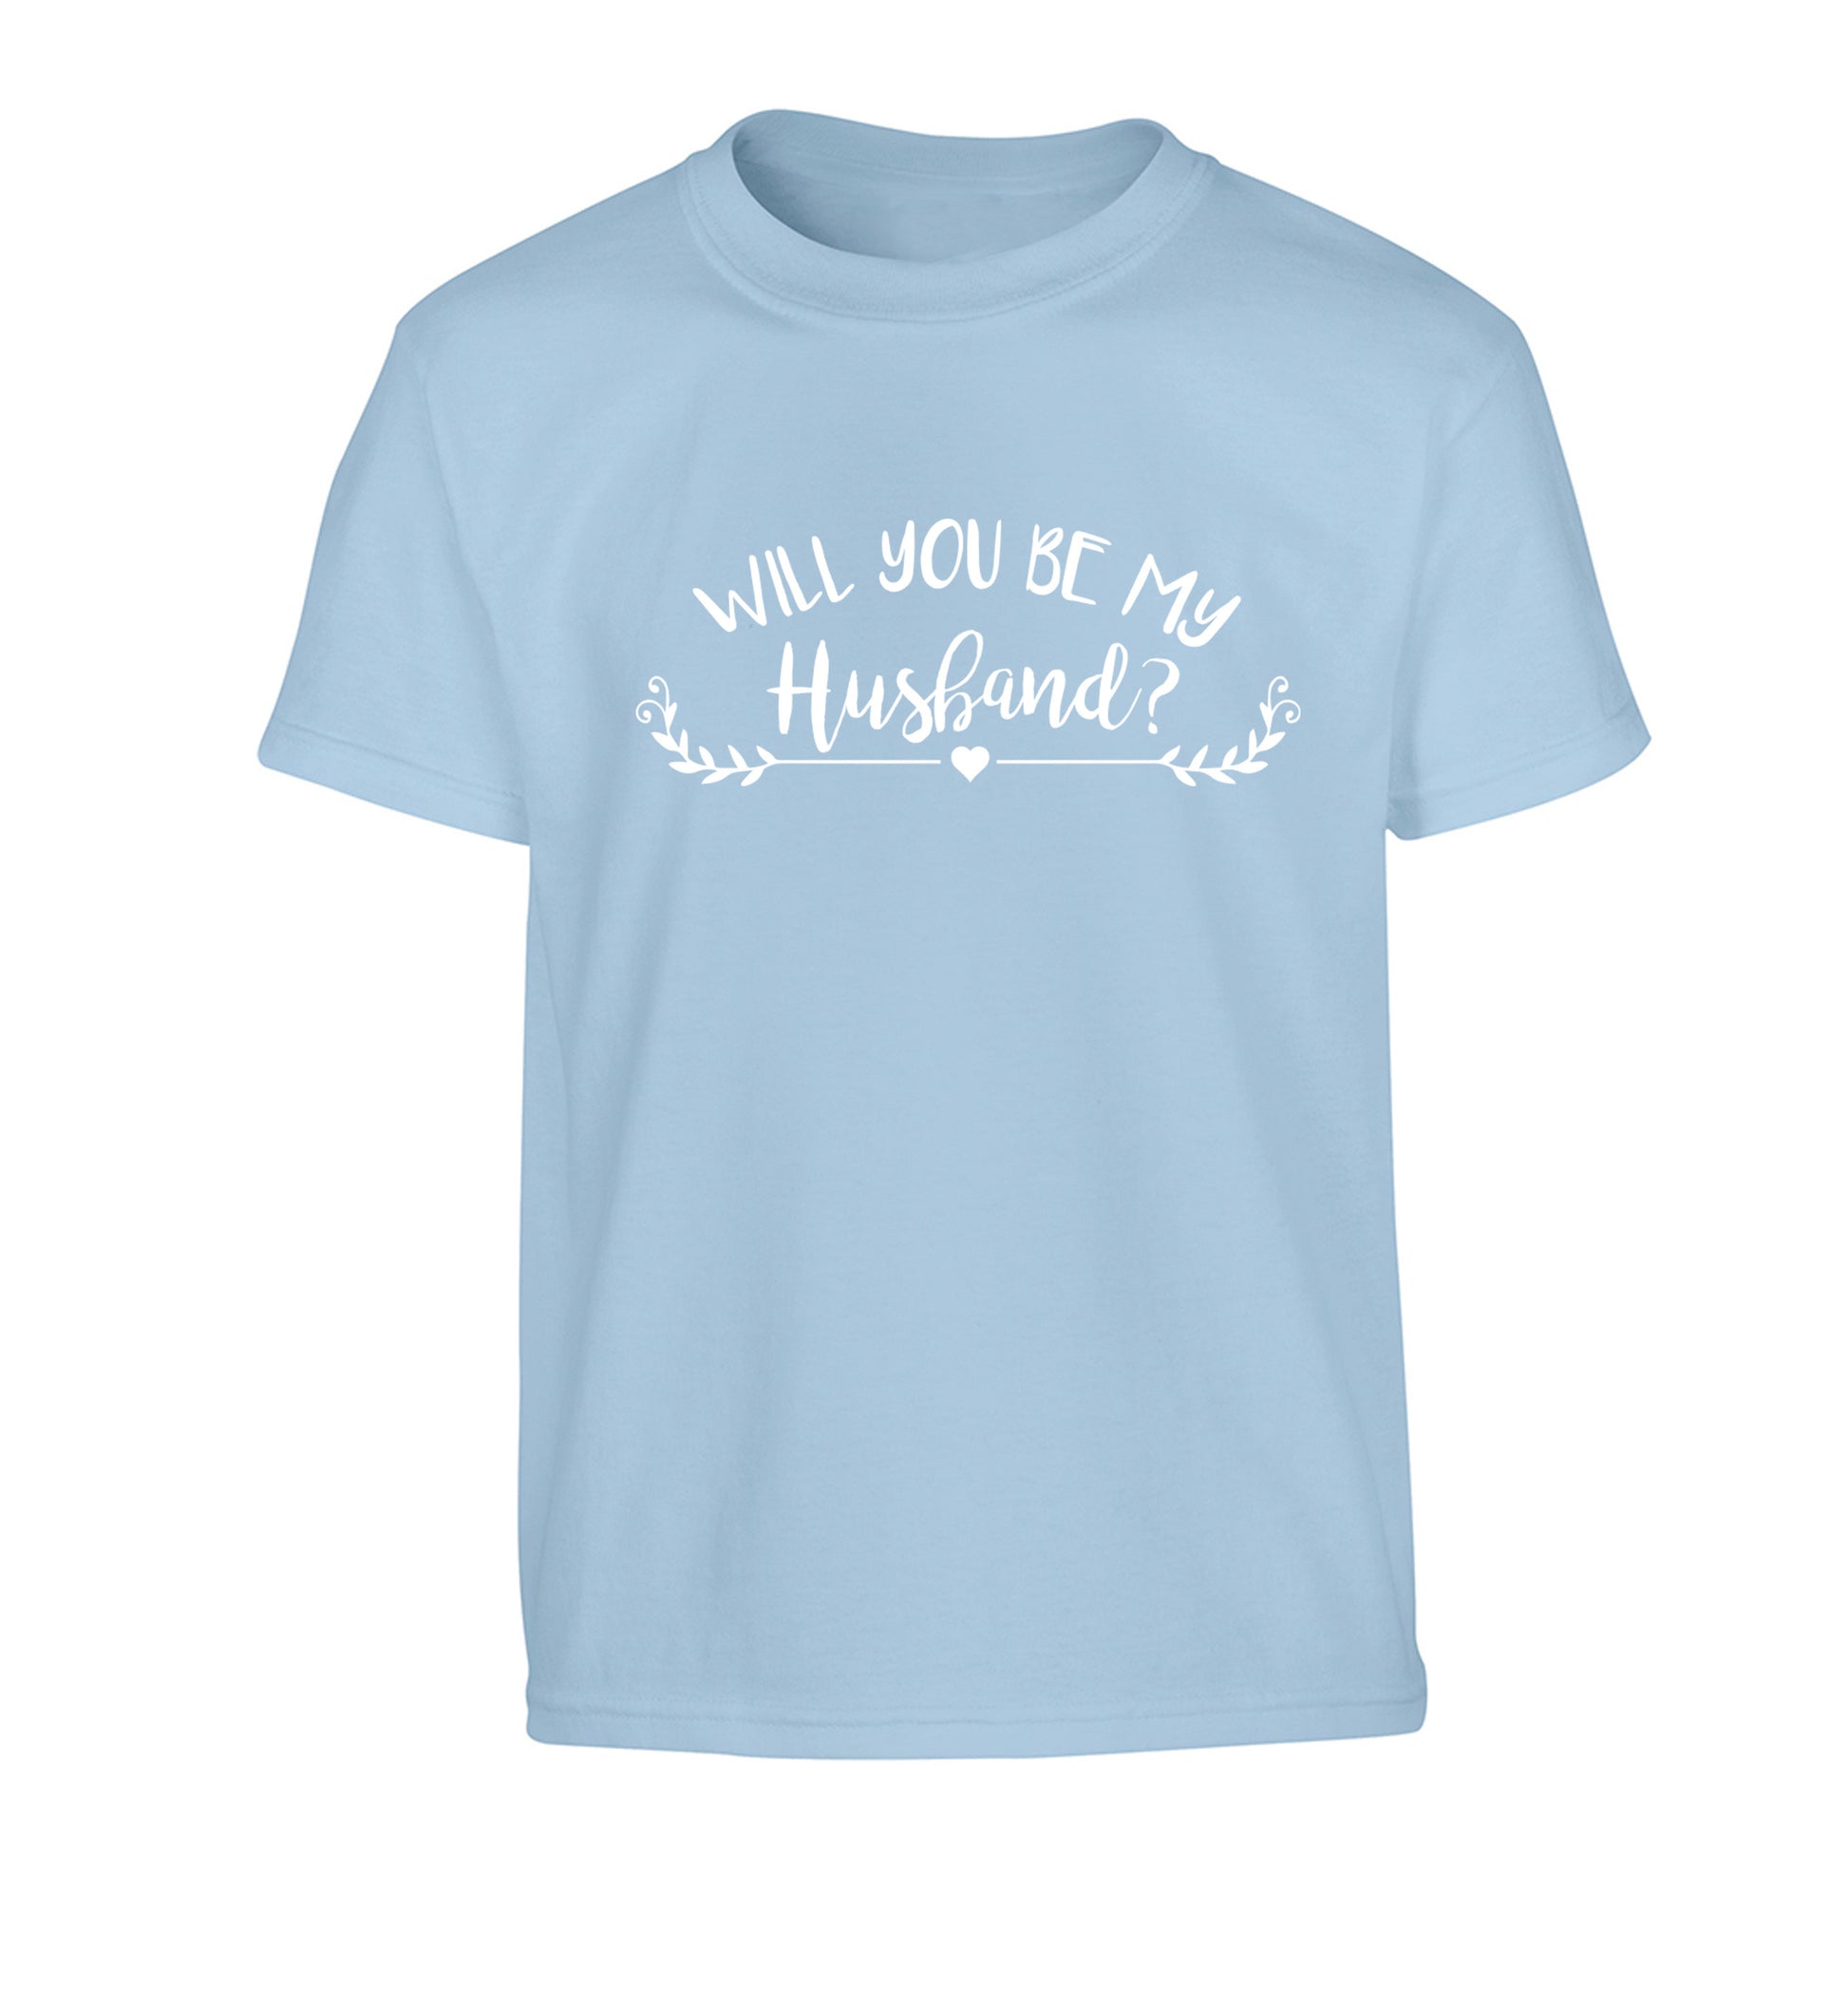 Will you be my husband? Children's light blue Tshirt 12-14 Years